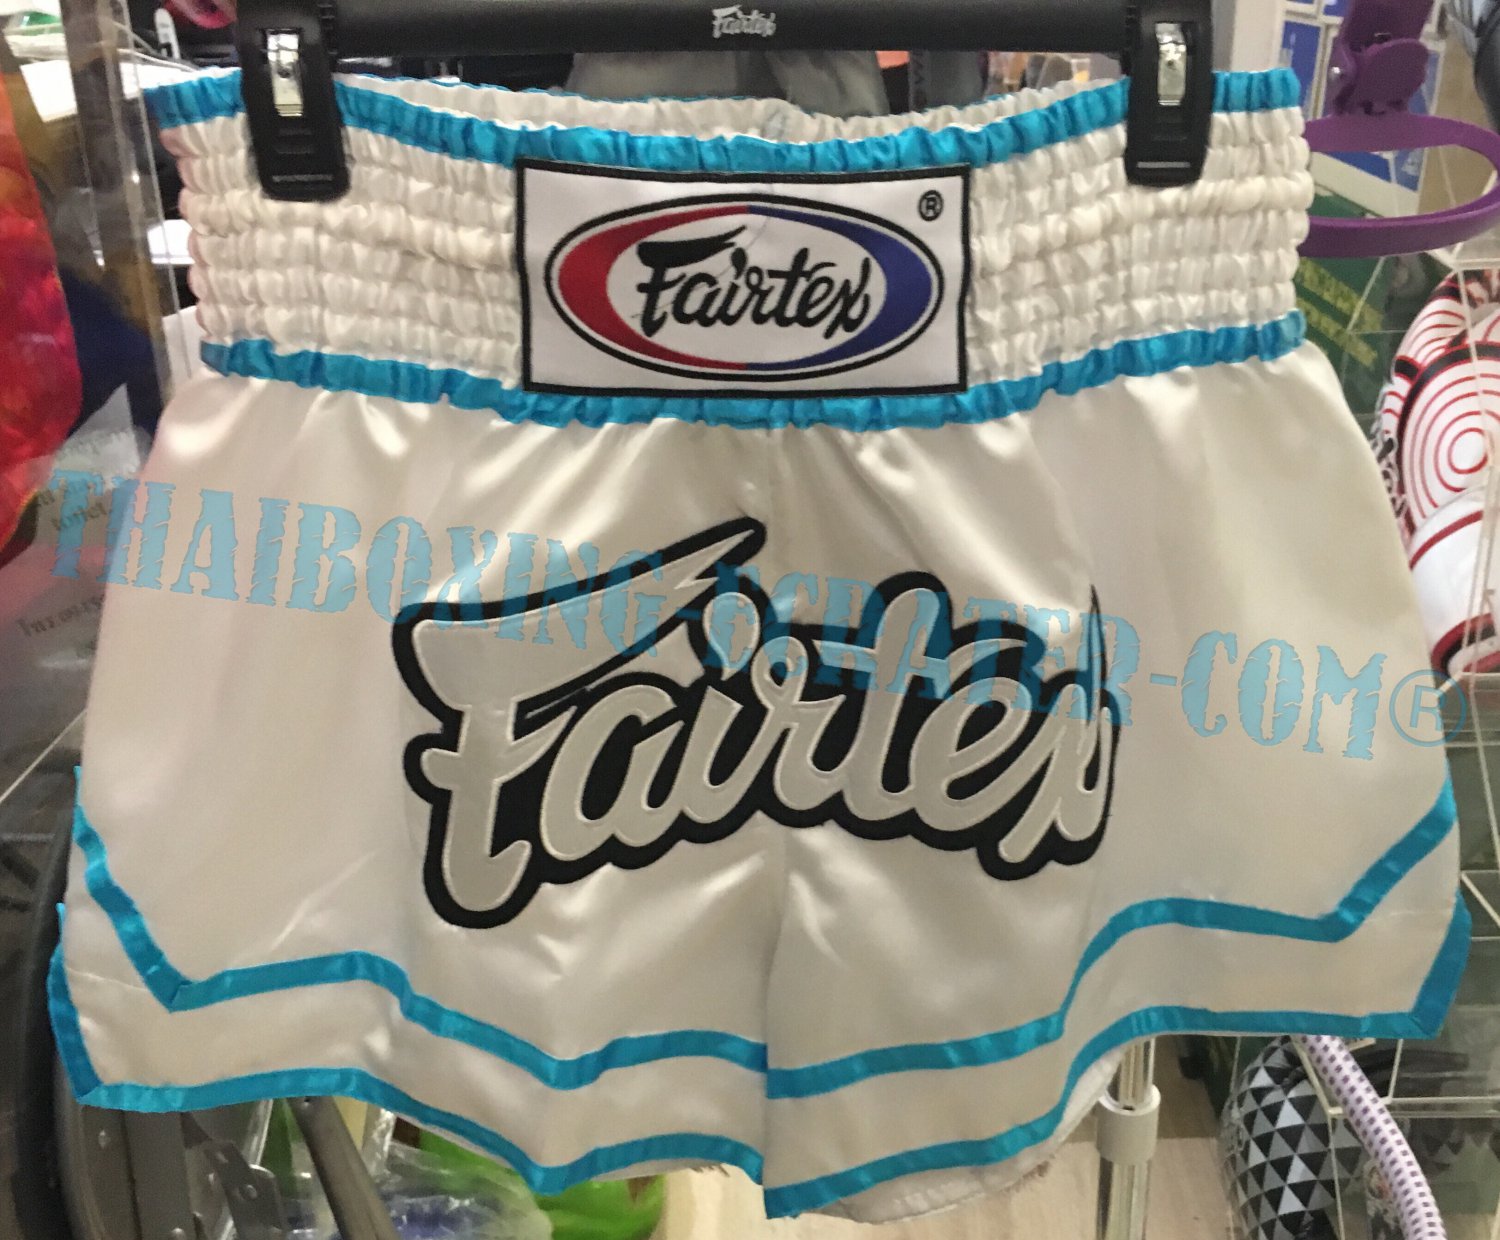 Lot no.4 Fairtex Thai Boxing shorts (see catalog in stocks)